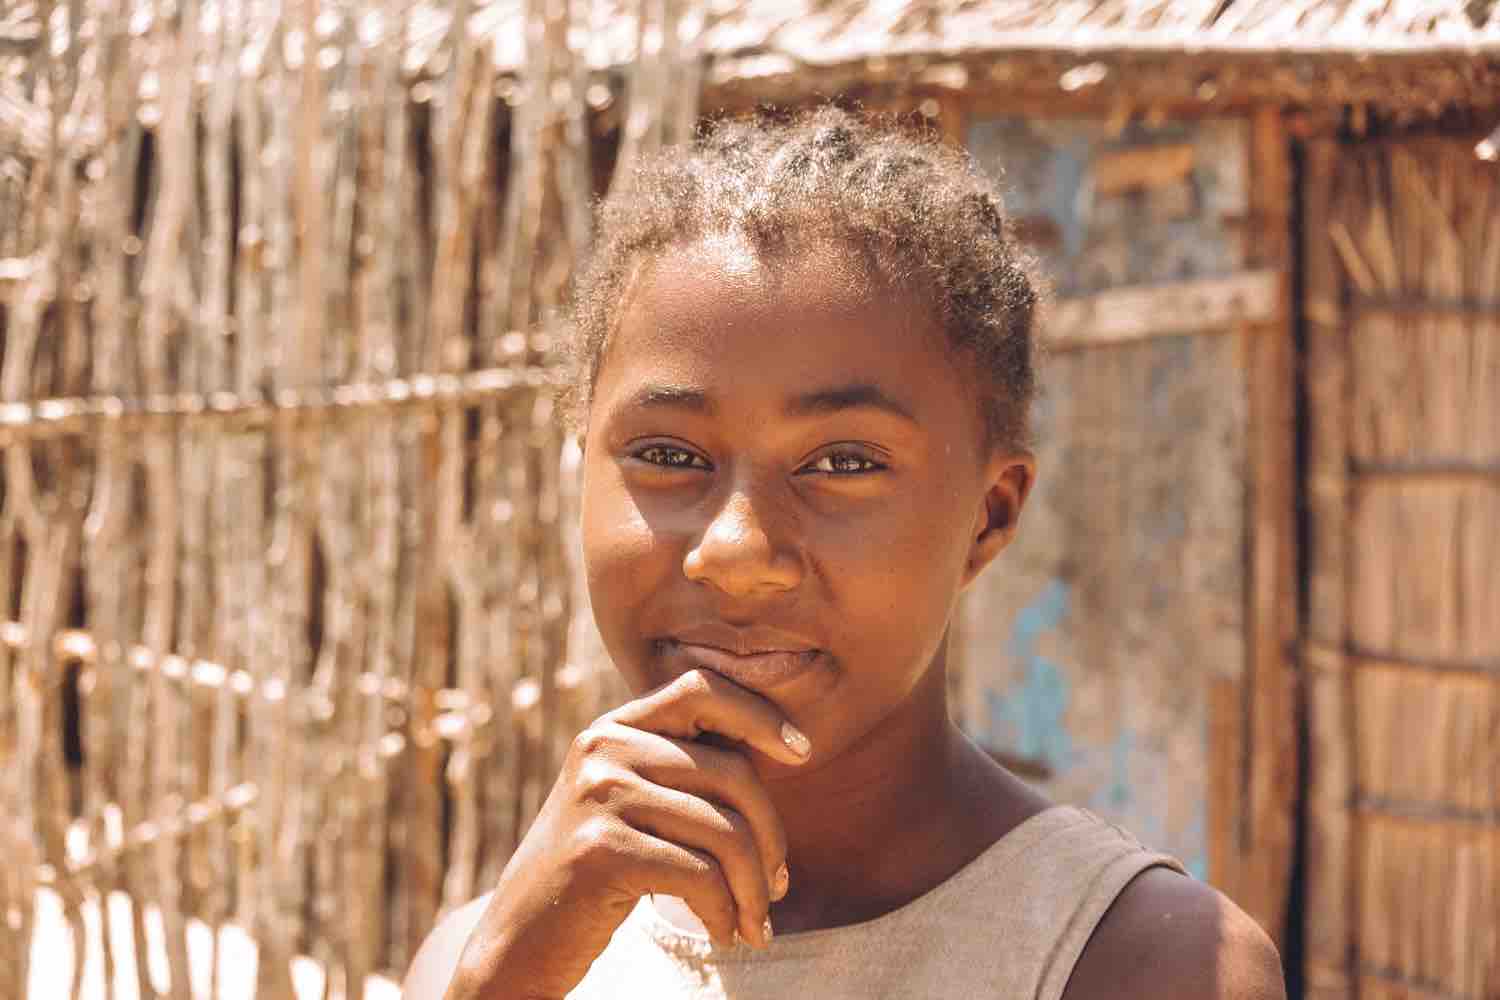 Madagascan girl on beach village